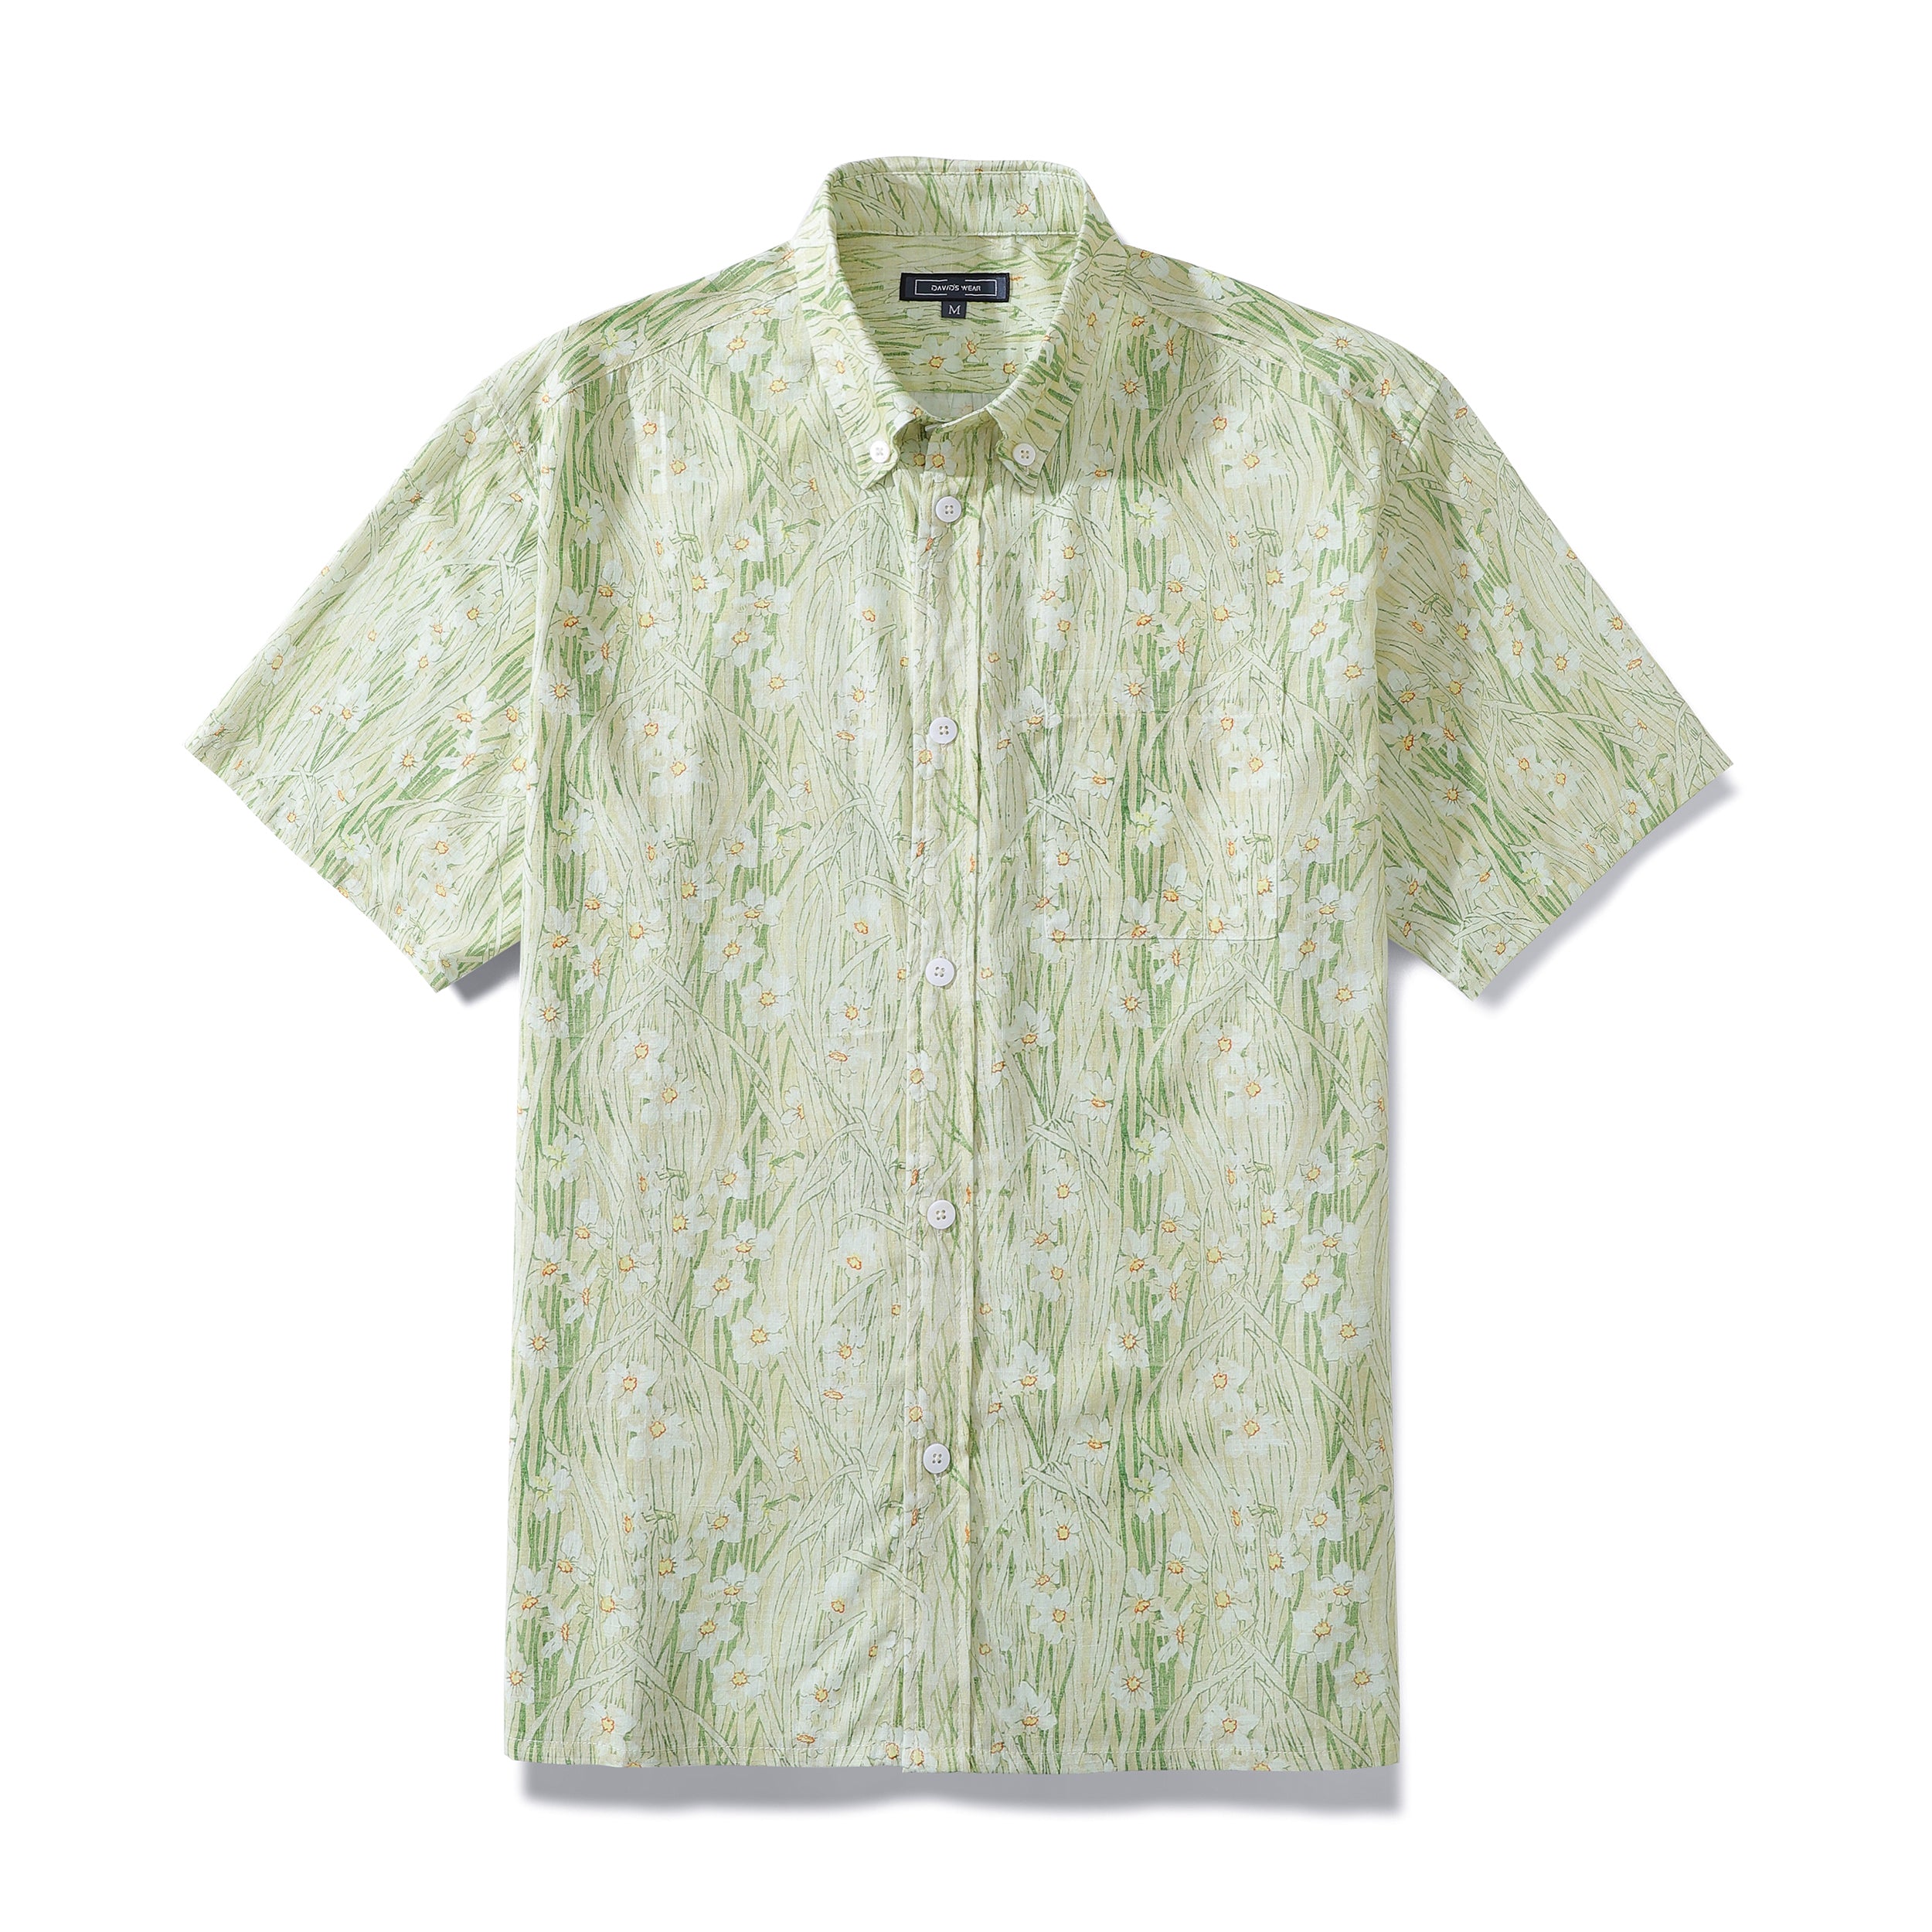 Men's Aloha Shirt Light Green Vintage Daffodils Floral Cotton Short Sleeve Button Down